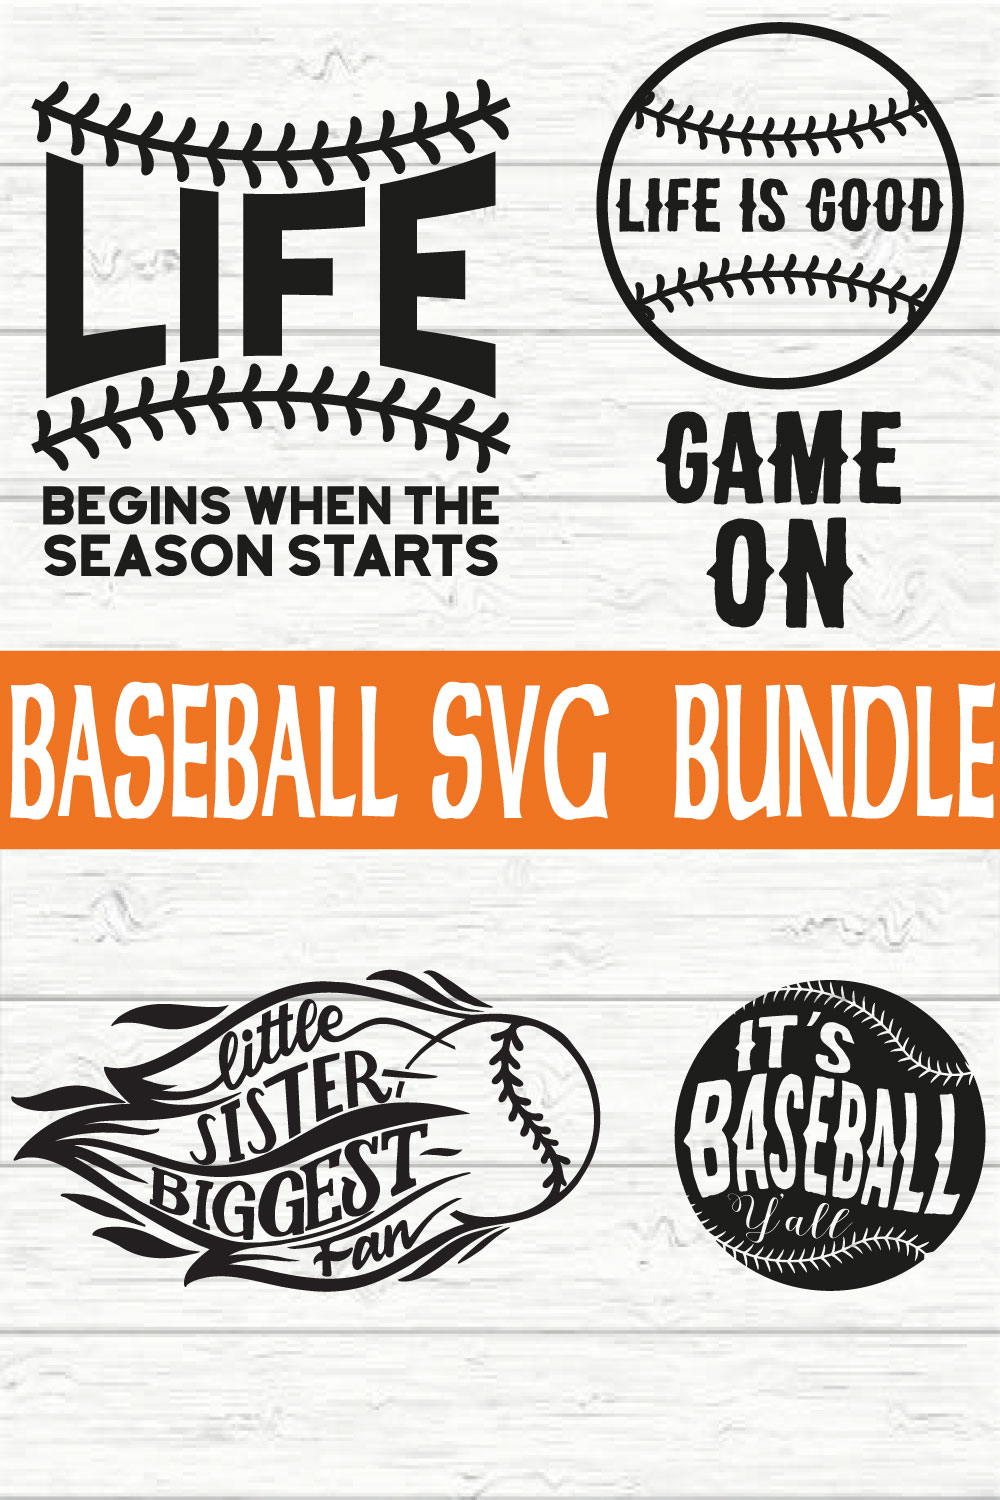 Baseball Typography Bundle vol 3 pinterest preview image.